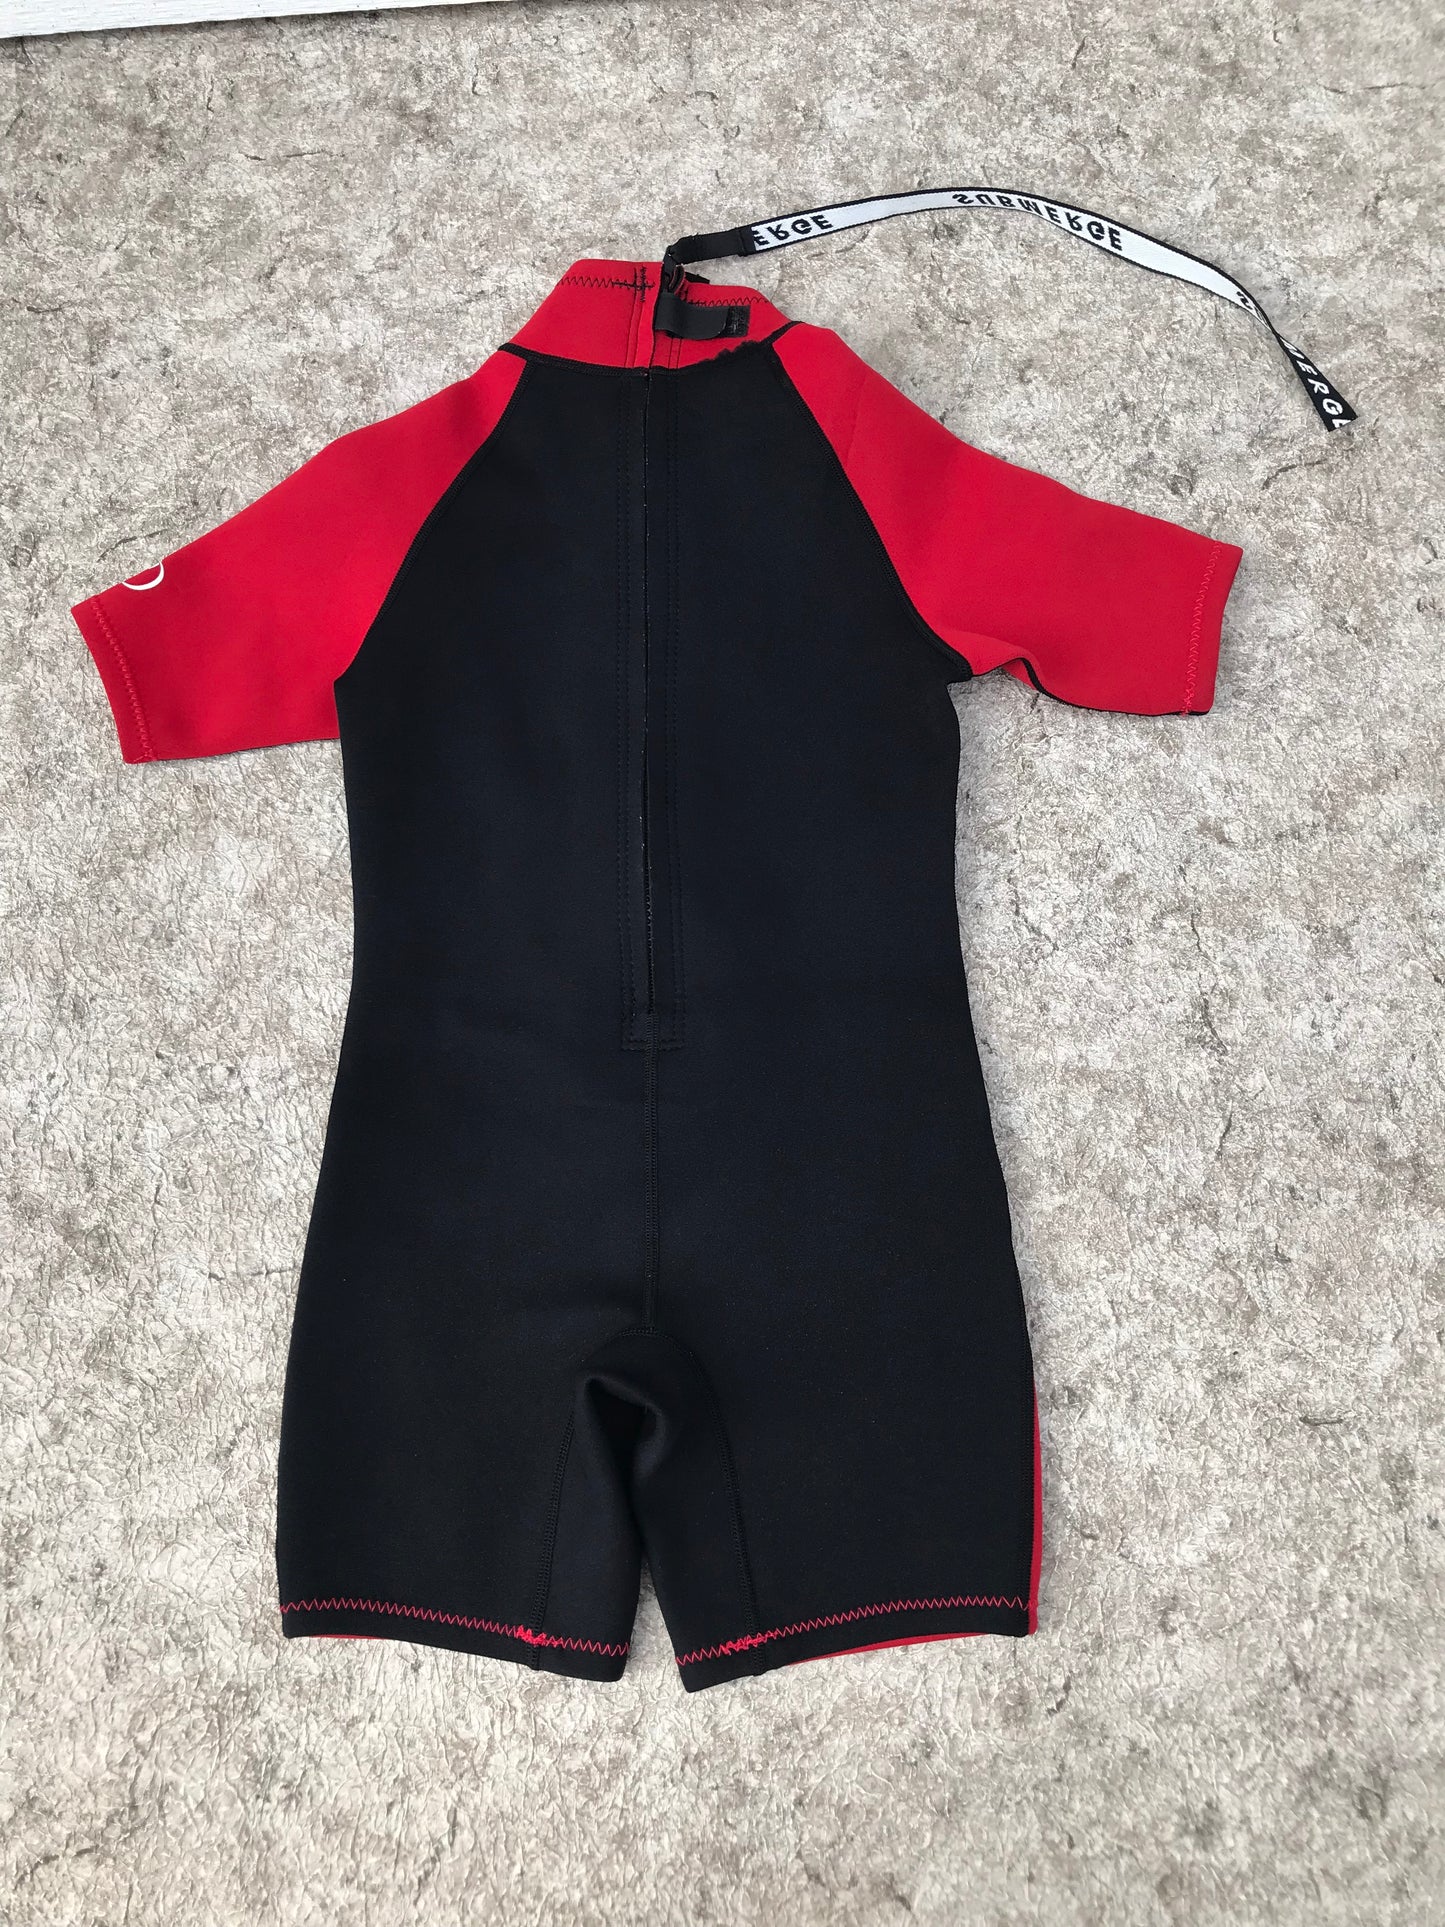 Wetsuit Child Size 8 Submerge Black Red 2-3 mm Neoprene